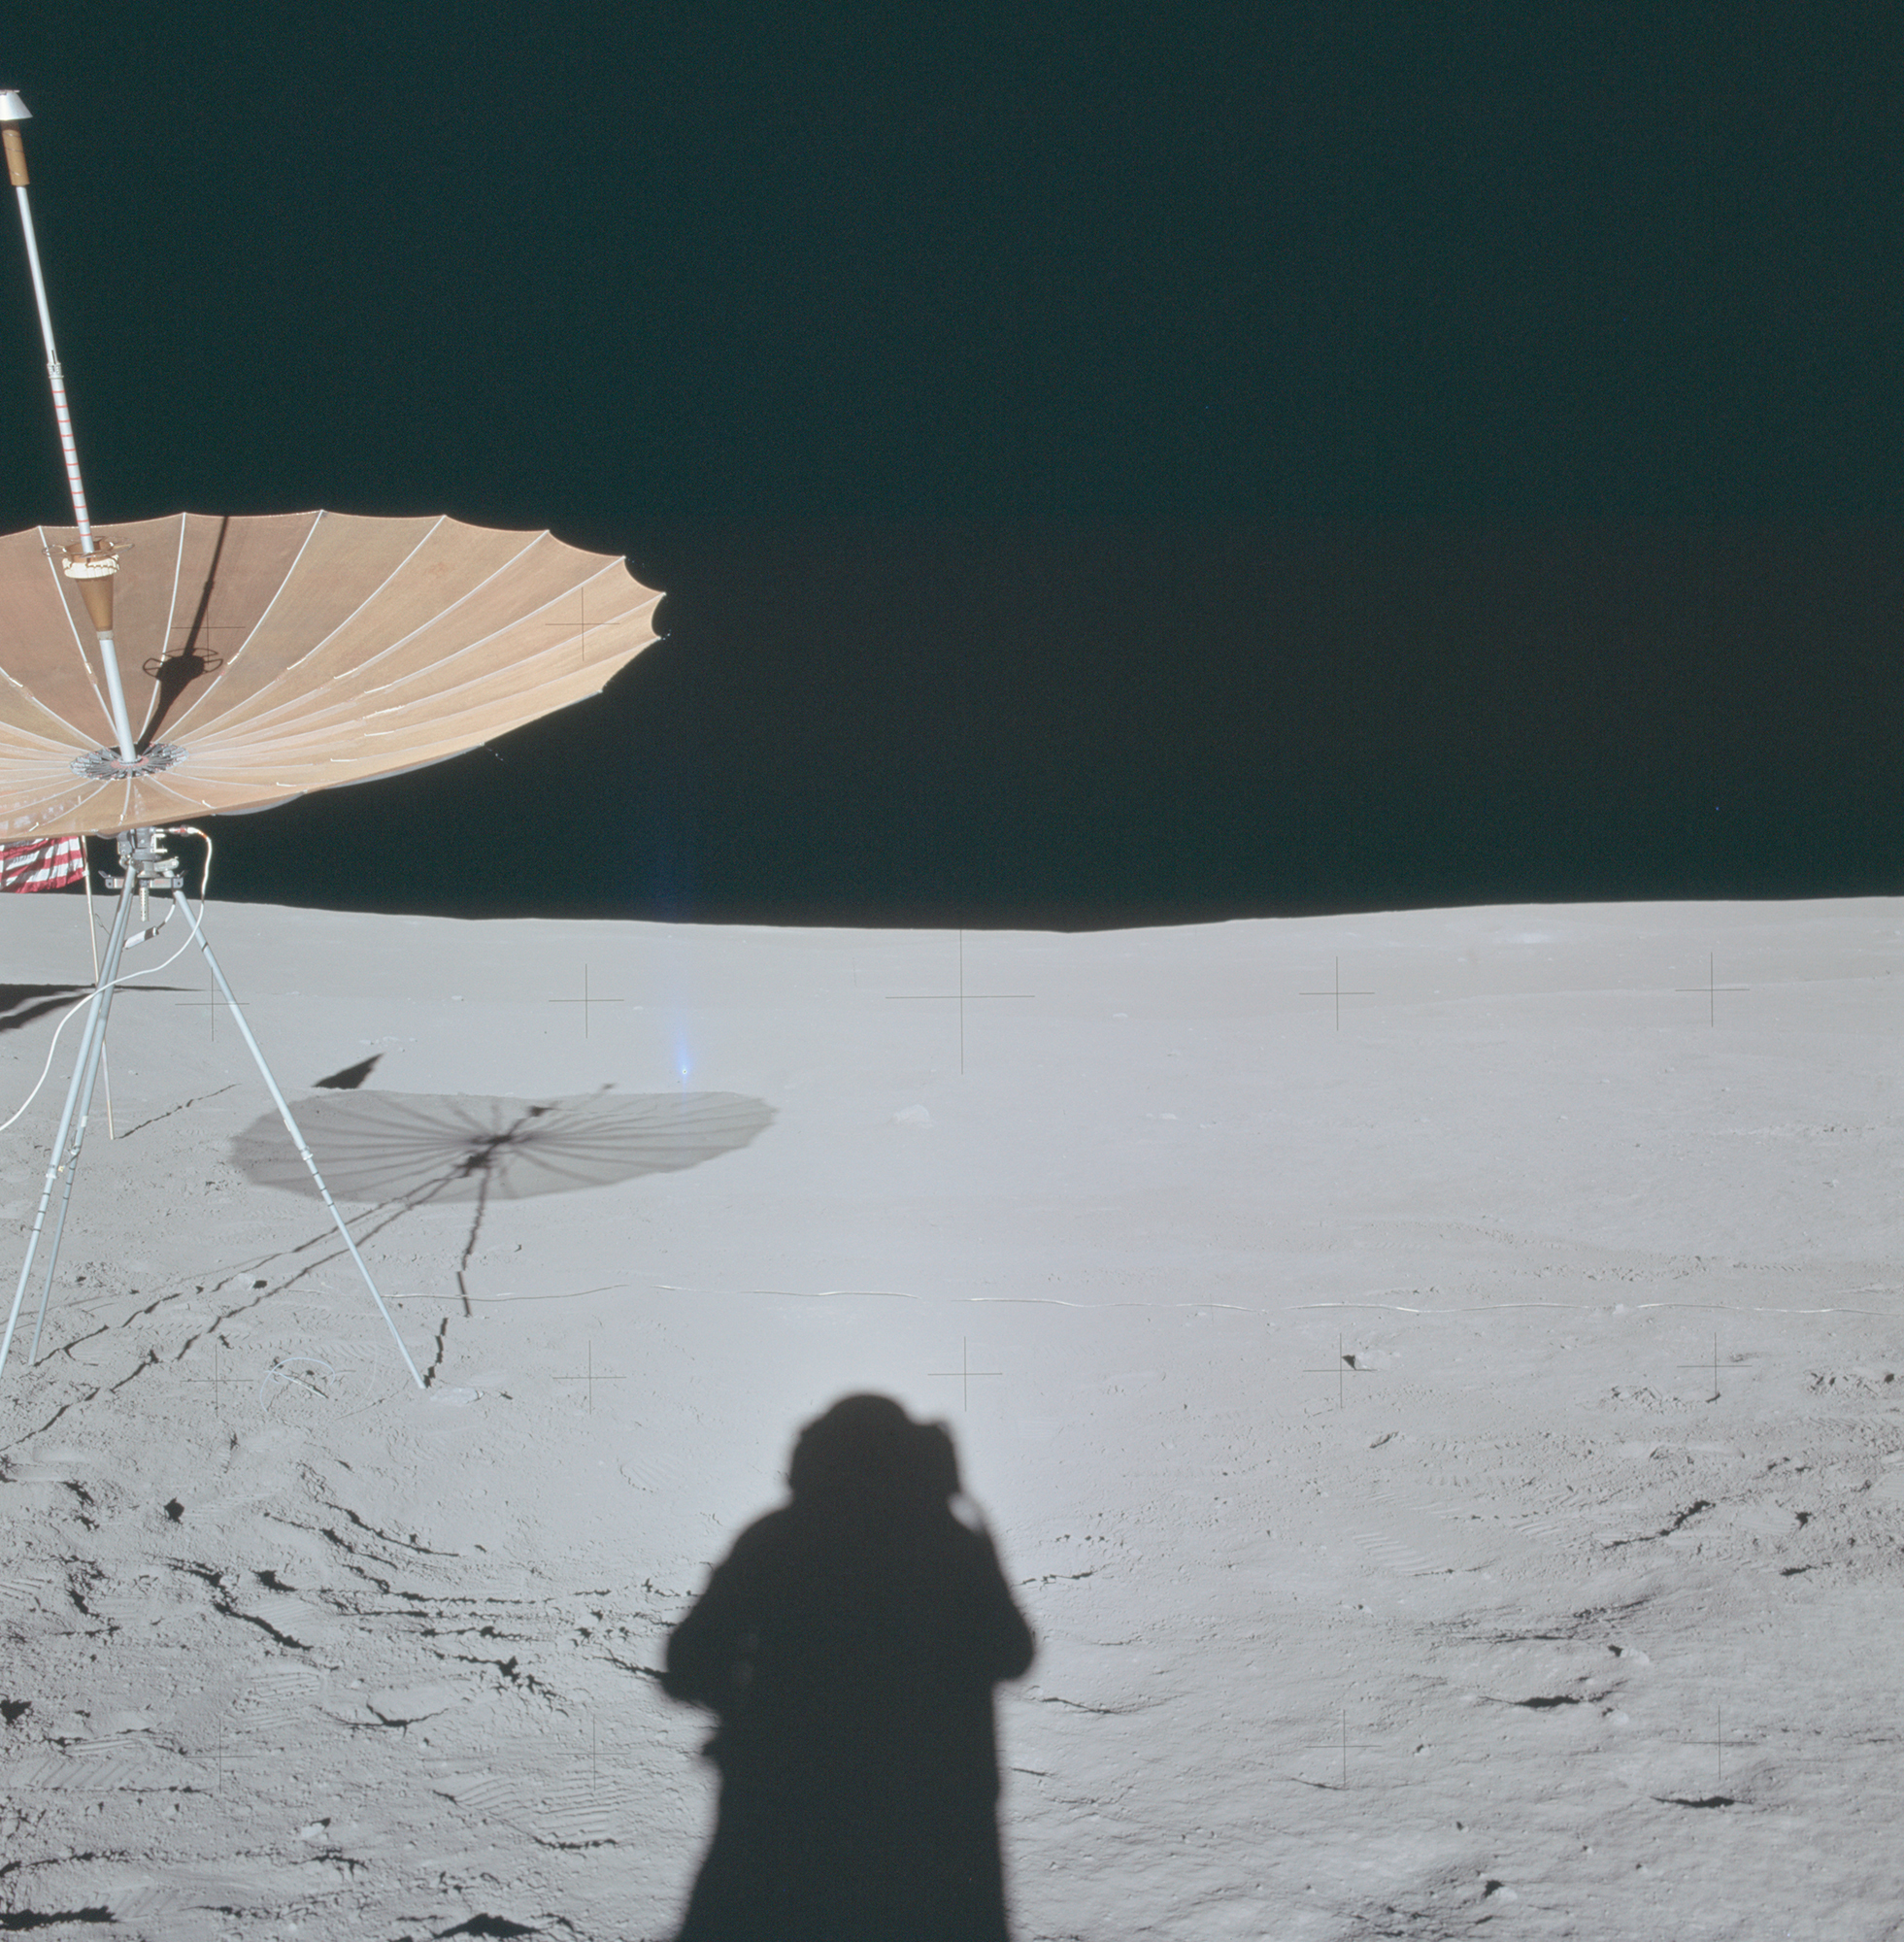 apollo-14-moon-pan-northeast-of-the-lunar-module.jpg